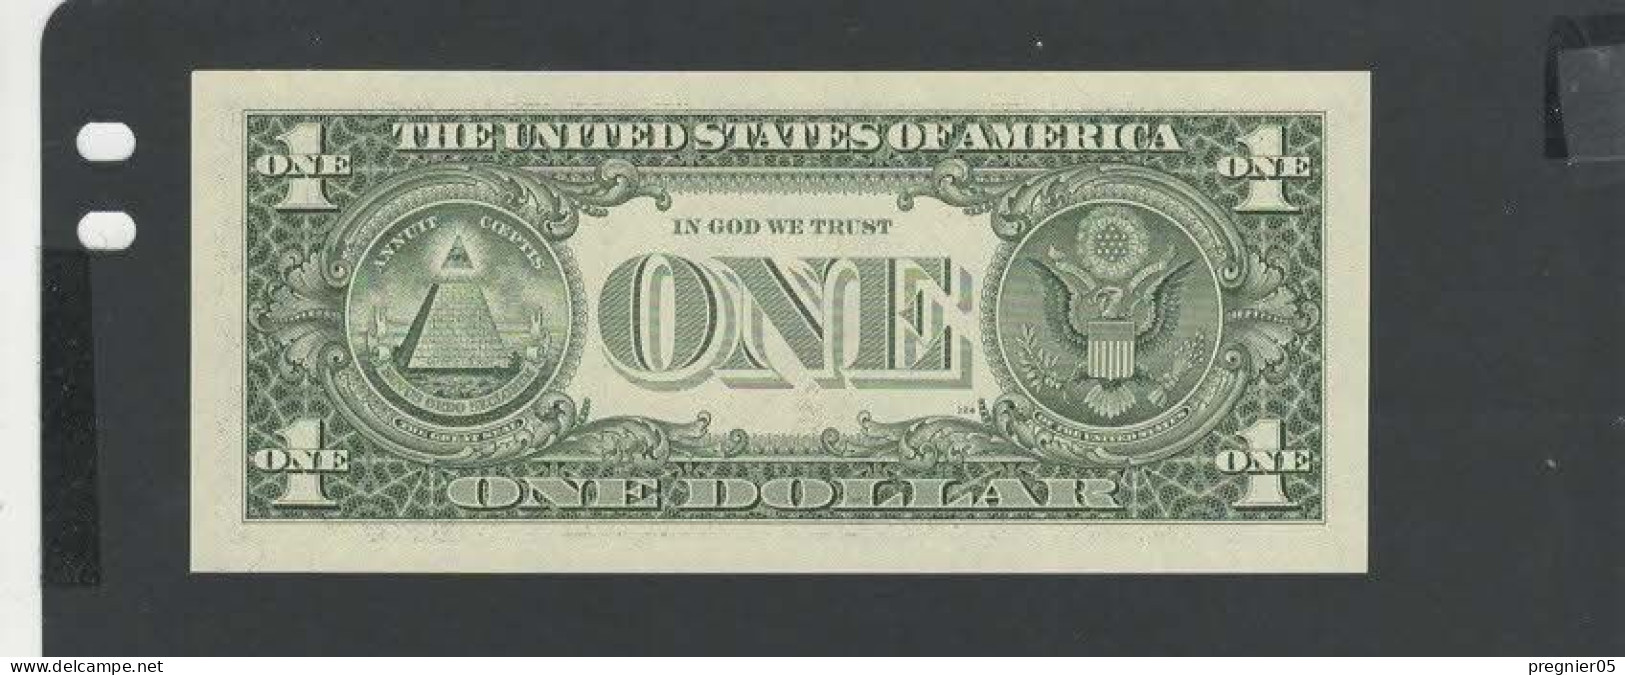 USA - Billet 1 Dollar 2003 NEUF/UNC P.515a § D 781 - Federal Reserve Notes (1928-...)